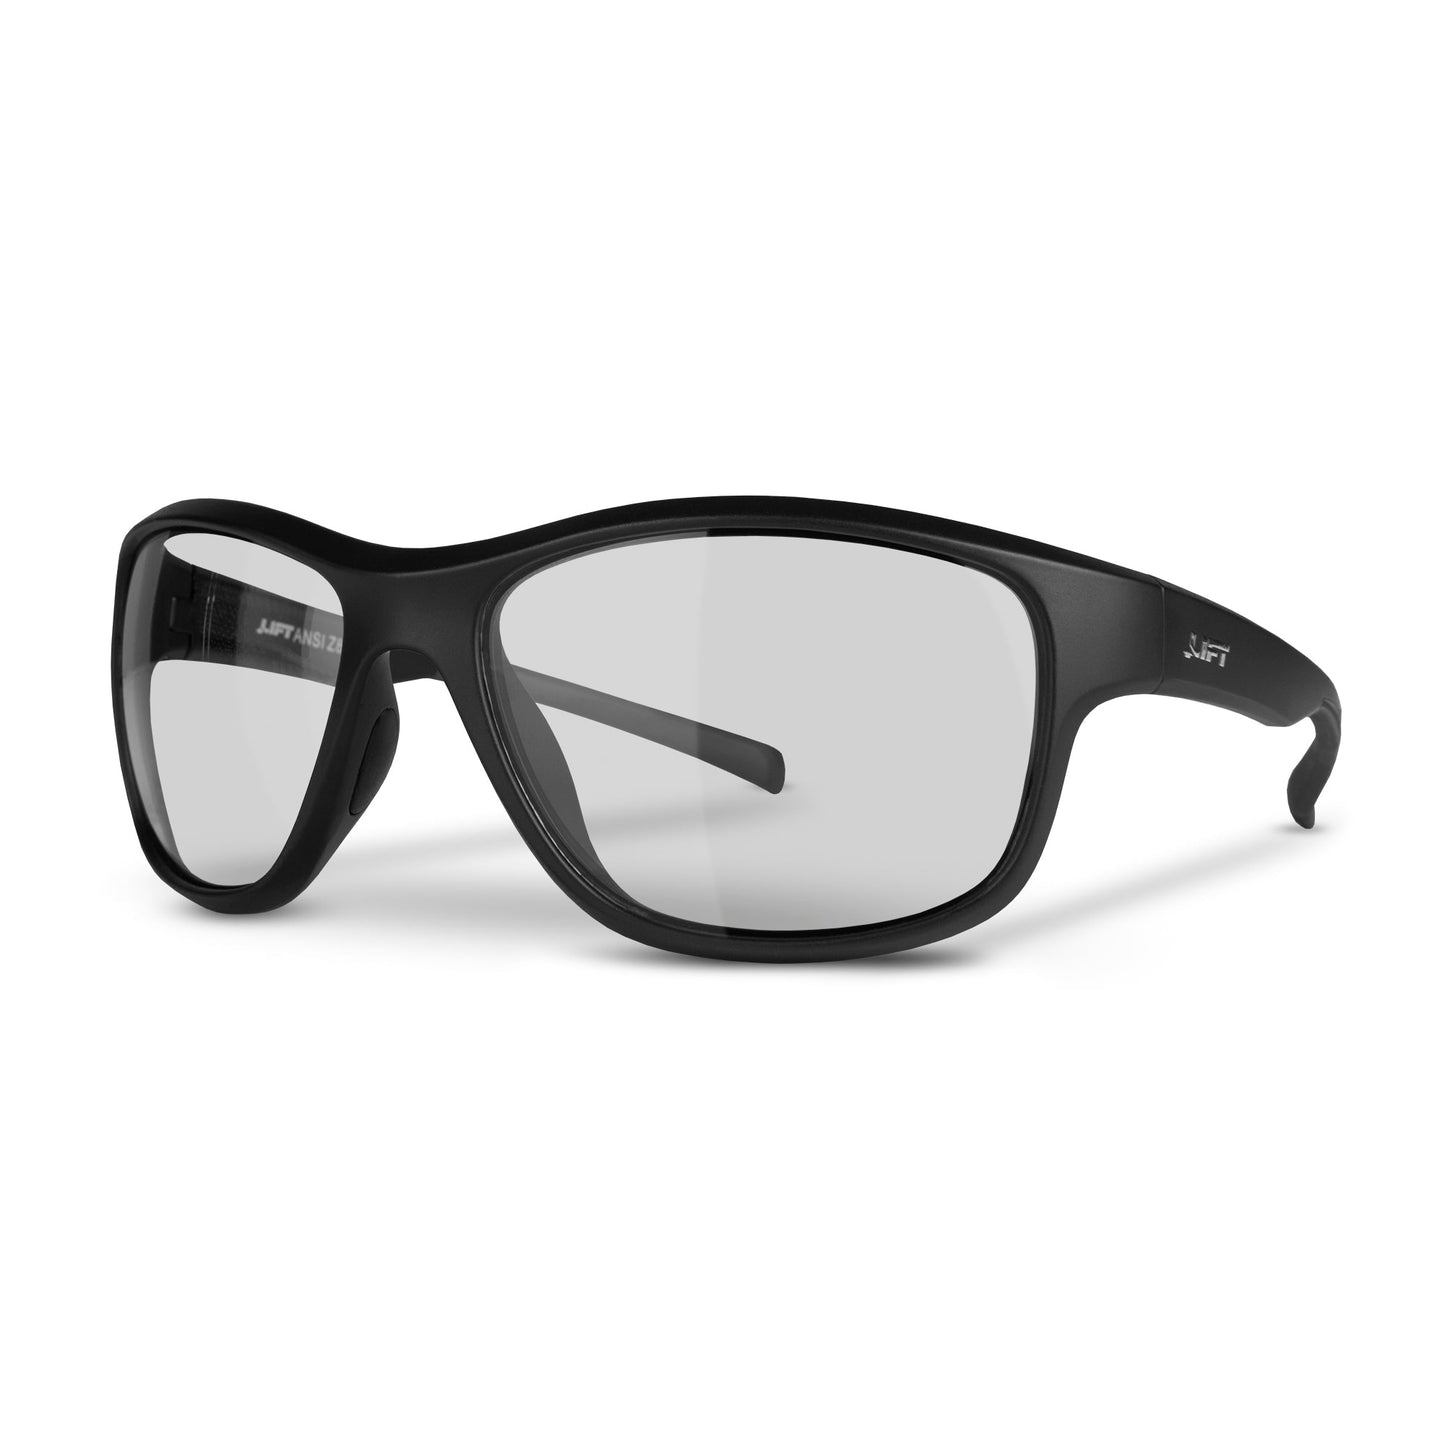 Delamo Safety Glasses - LIFT Safety